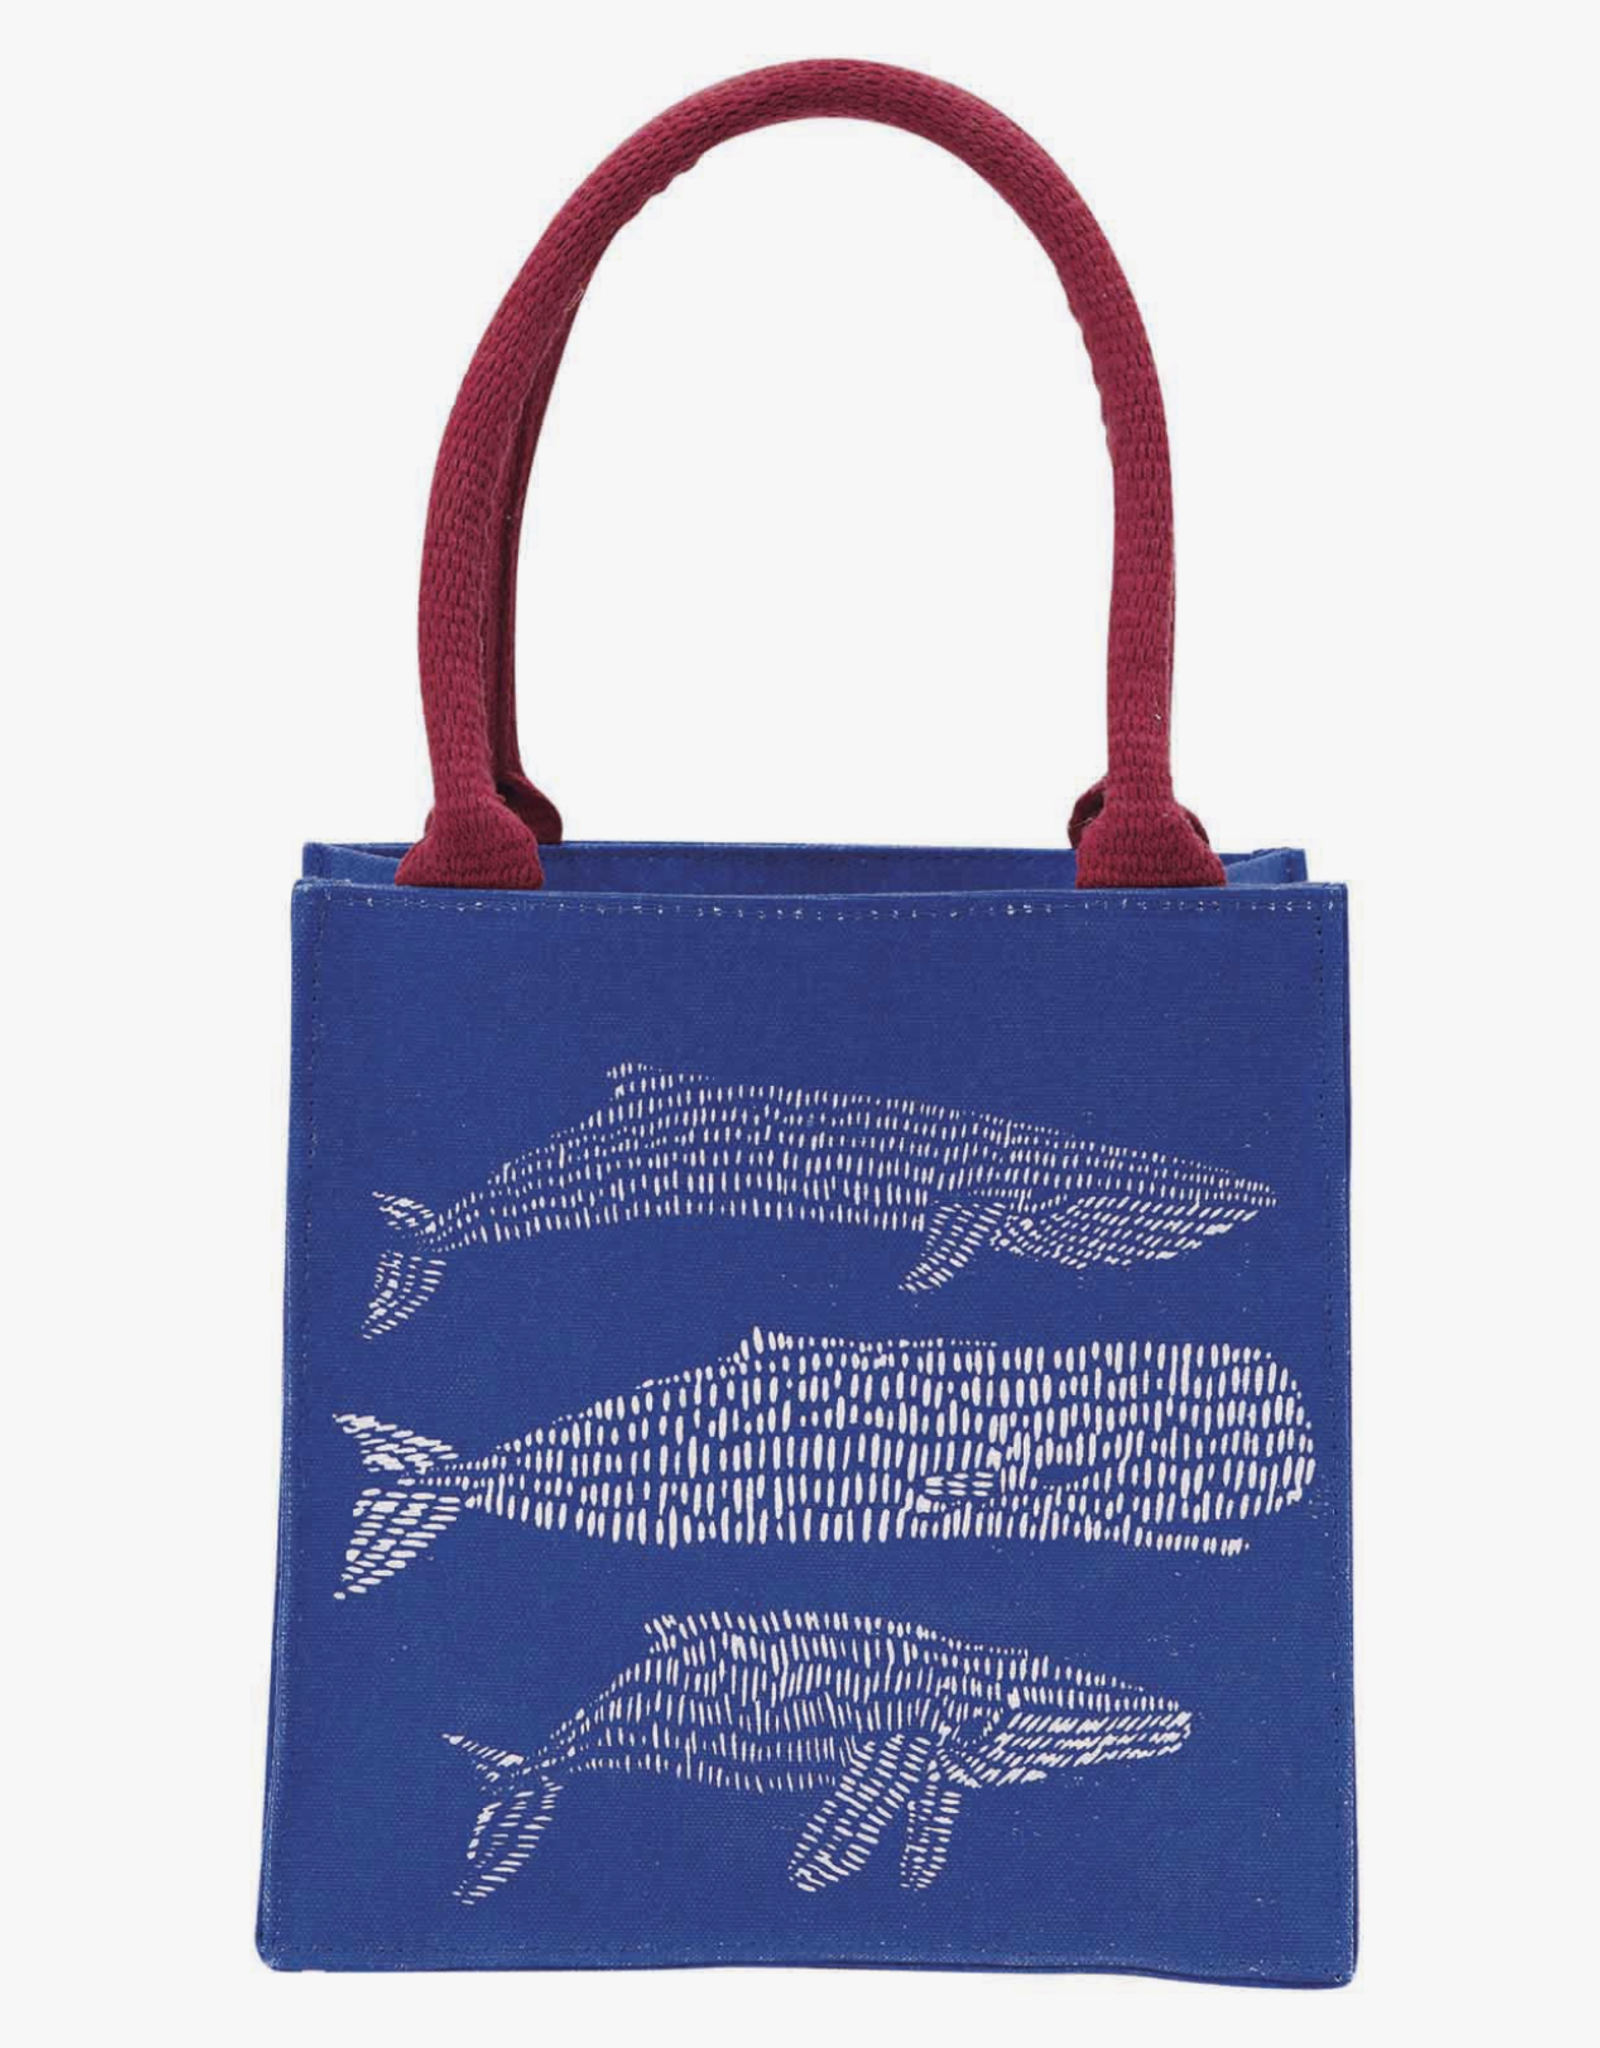 Rockflowerpaper Reusable Gift Bag- Whales Blue